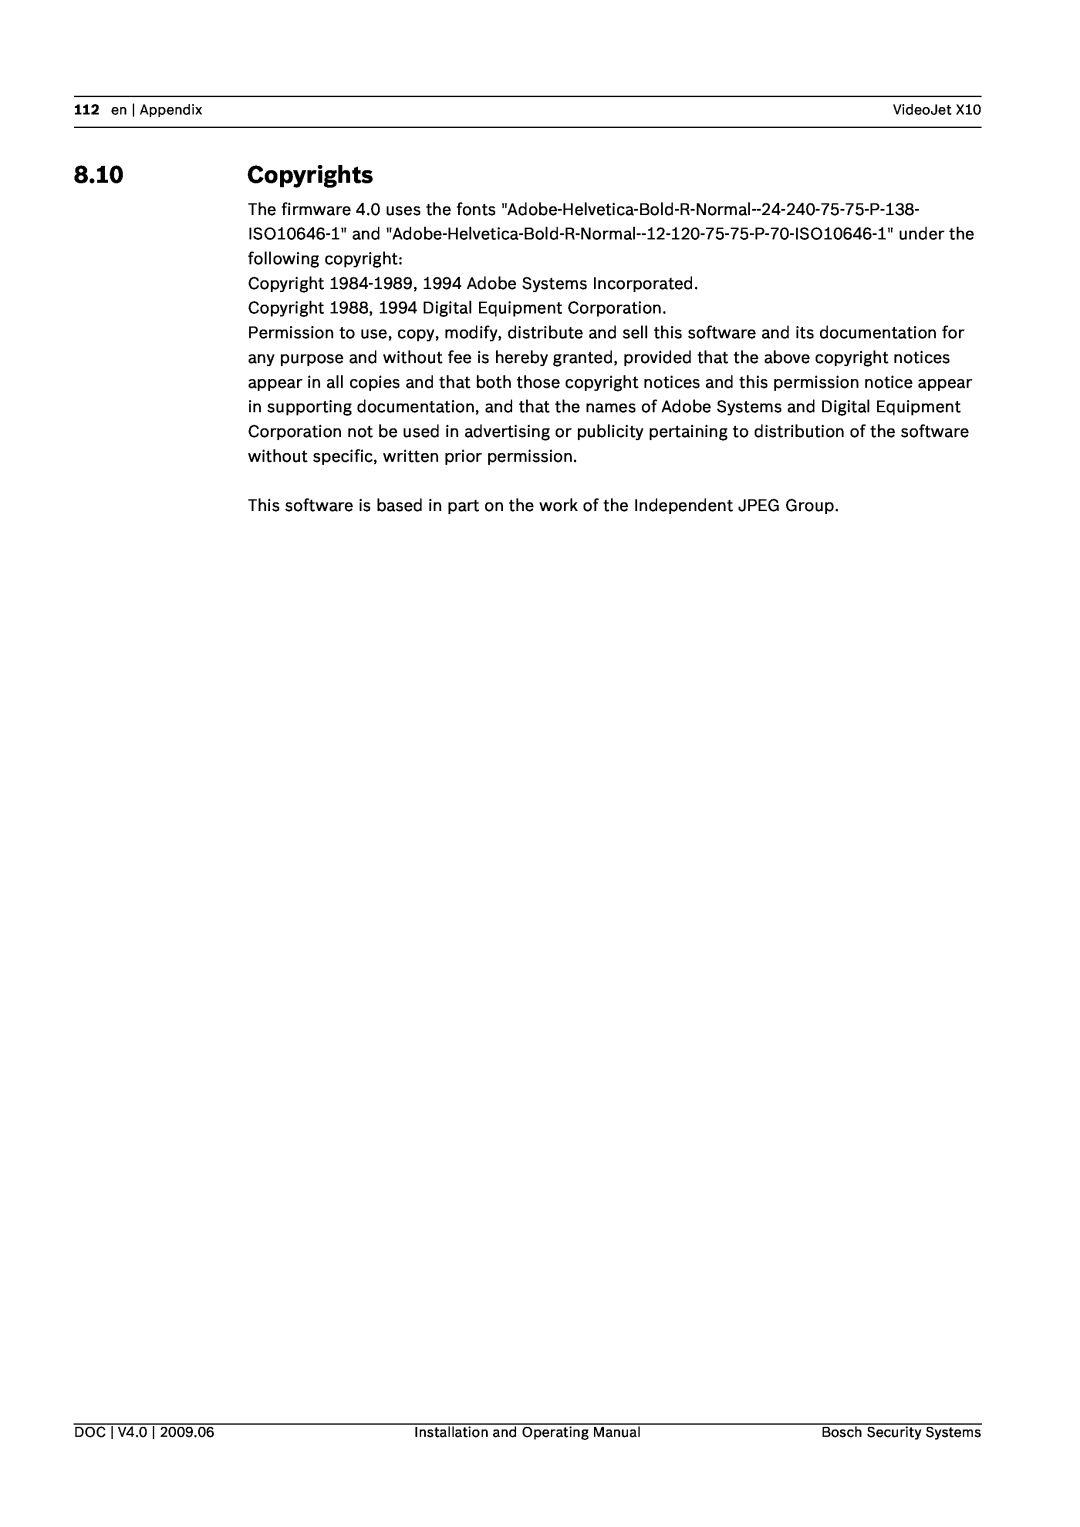 Bosch Appliances X10 manual 8.10Copyrights 